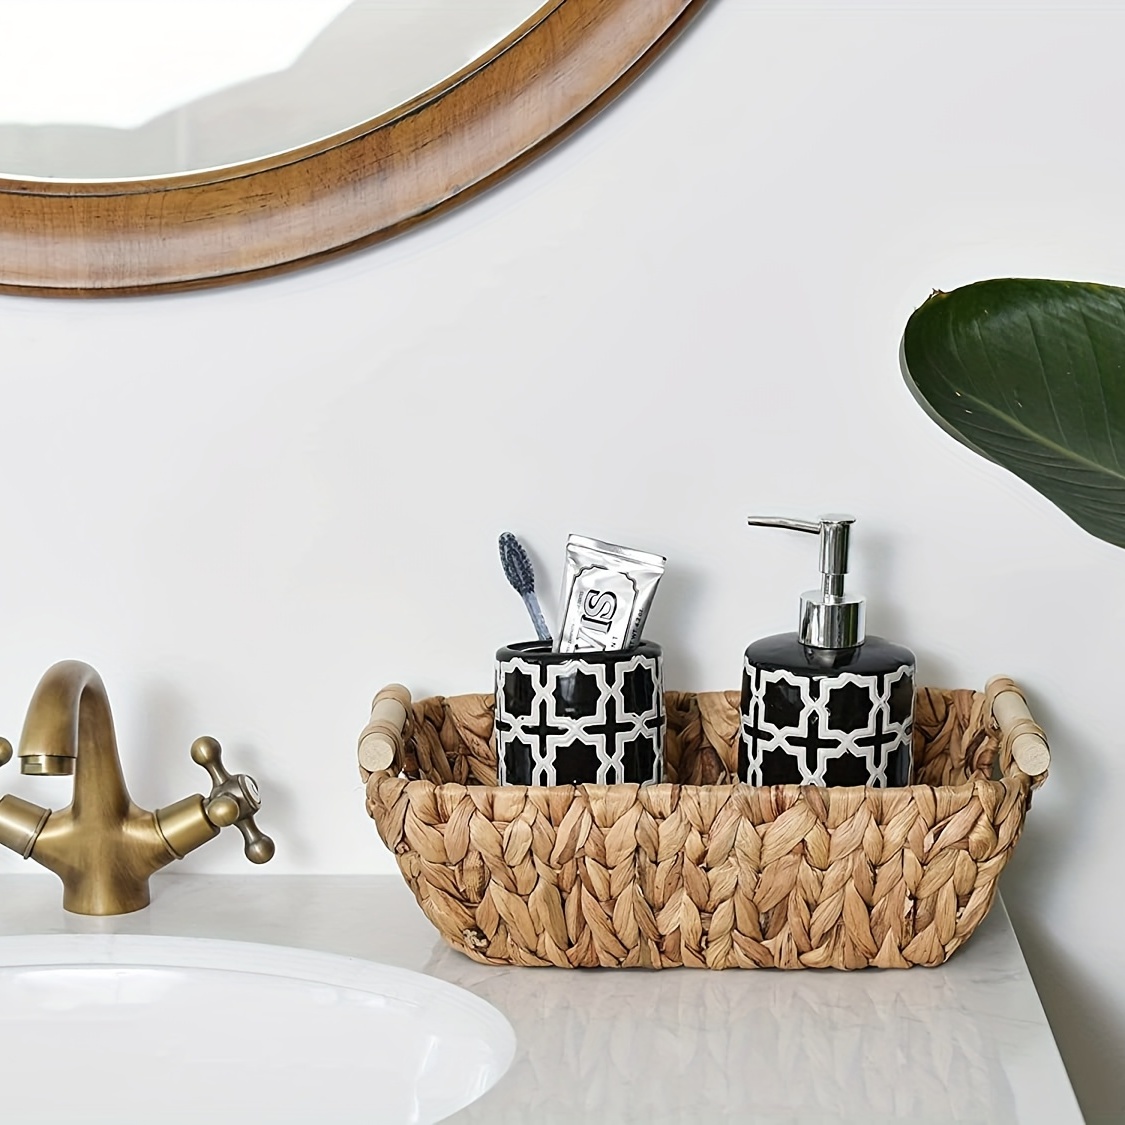 

1pc Hand-woven Storage Basket, Small Wicker Woven Basket, Water Hyacinth Storage Basket With Wooden Handle, Bathroom Cosmetic Toiletry Organizer, Room Decor, Home Decor